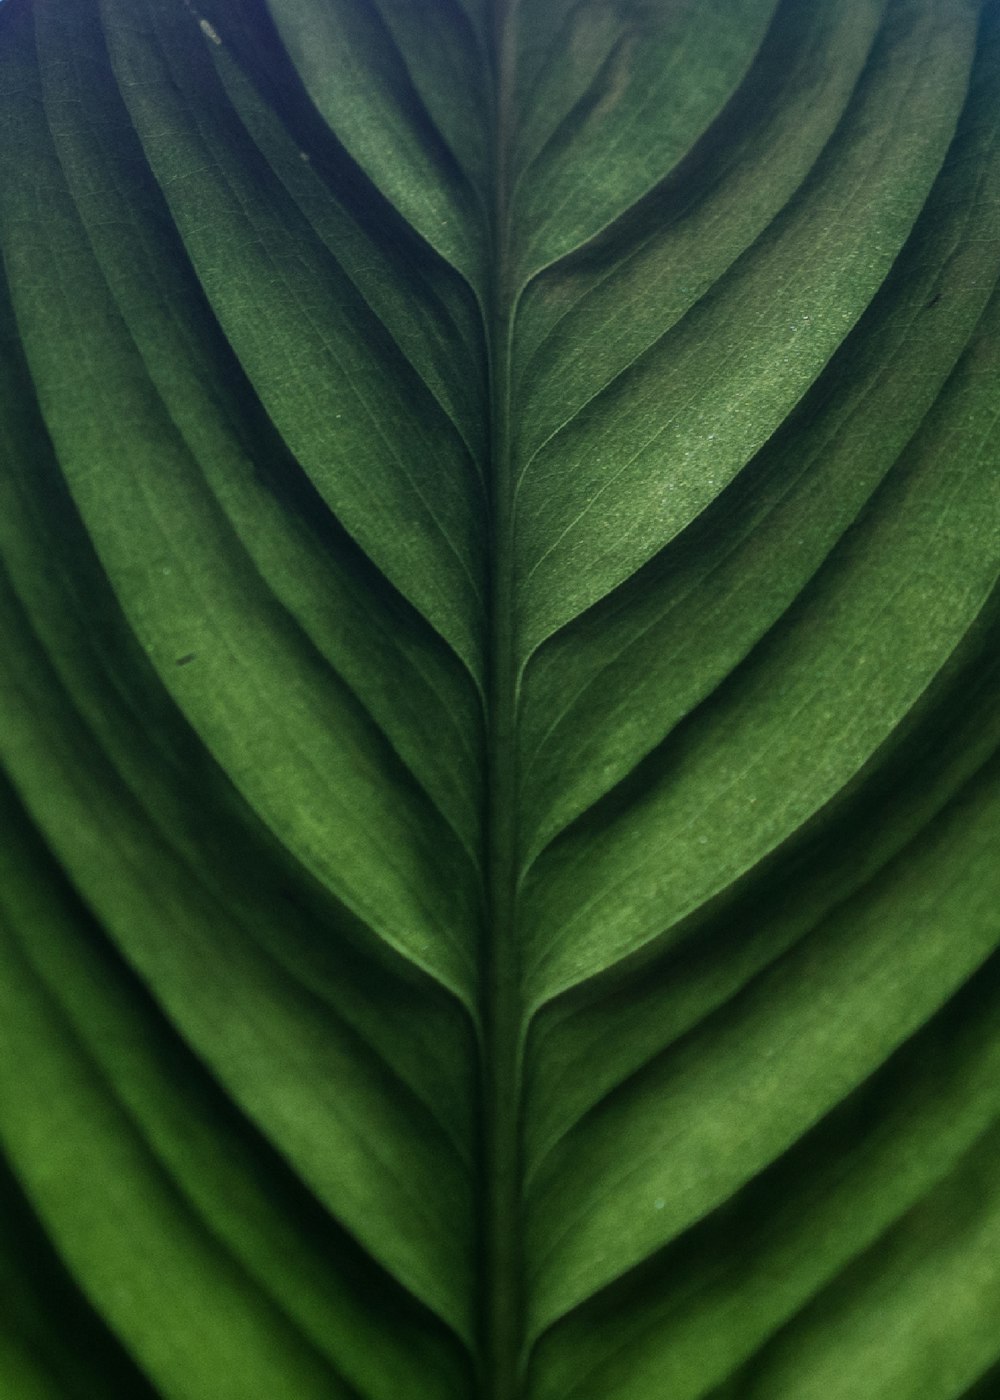 750+ Leaf Texture Pictures | Download Free Images on Unsplash